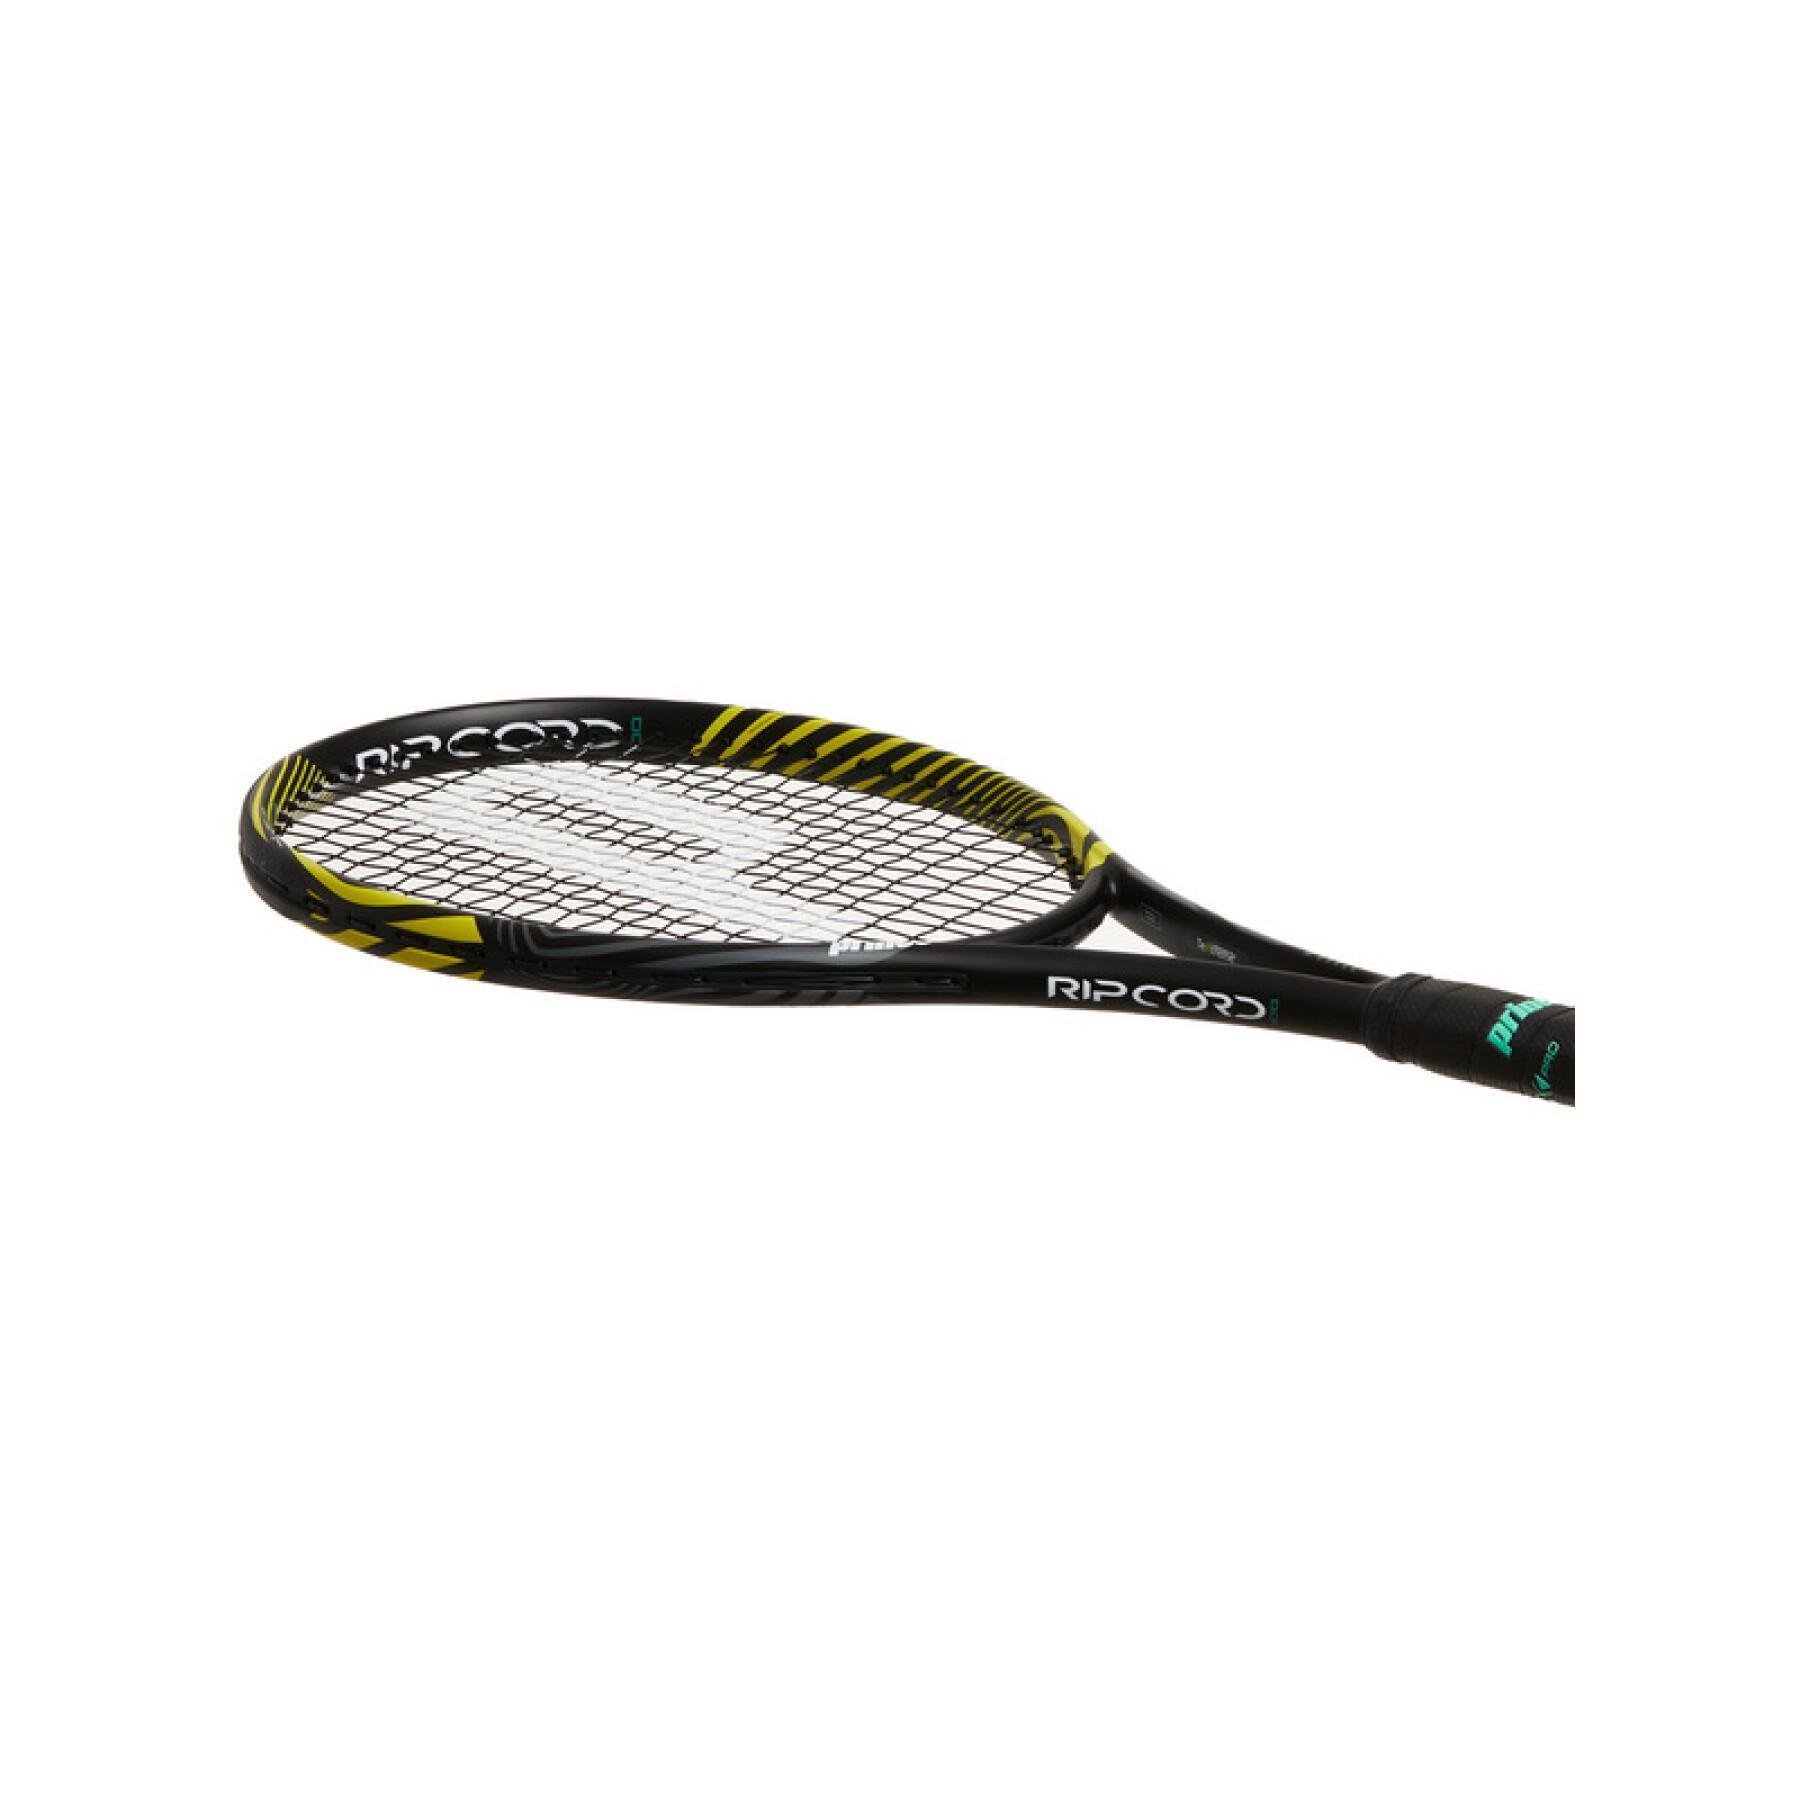 Raquete de ténis Prince Ripcord 280